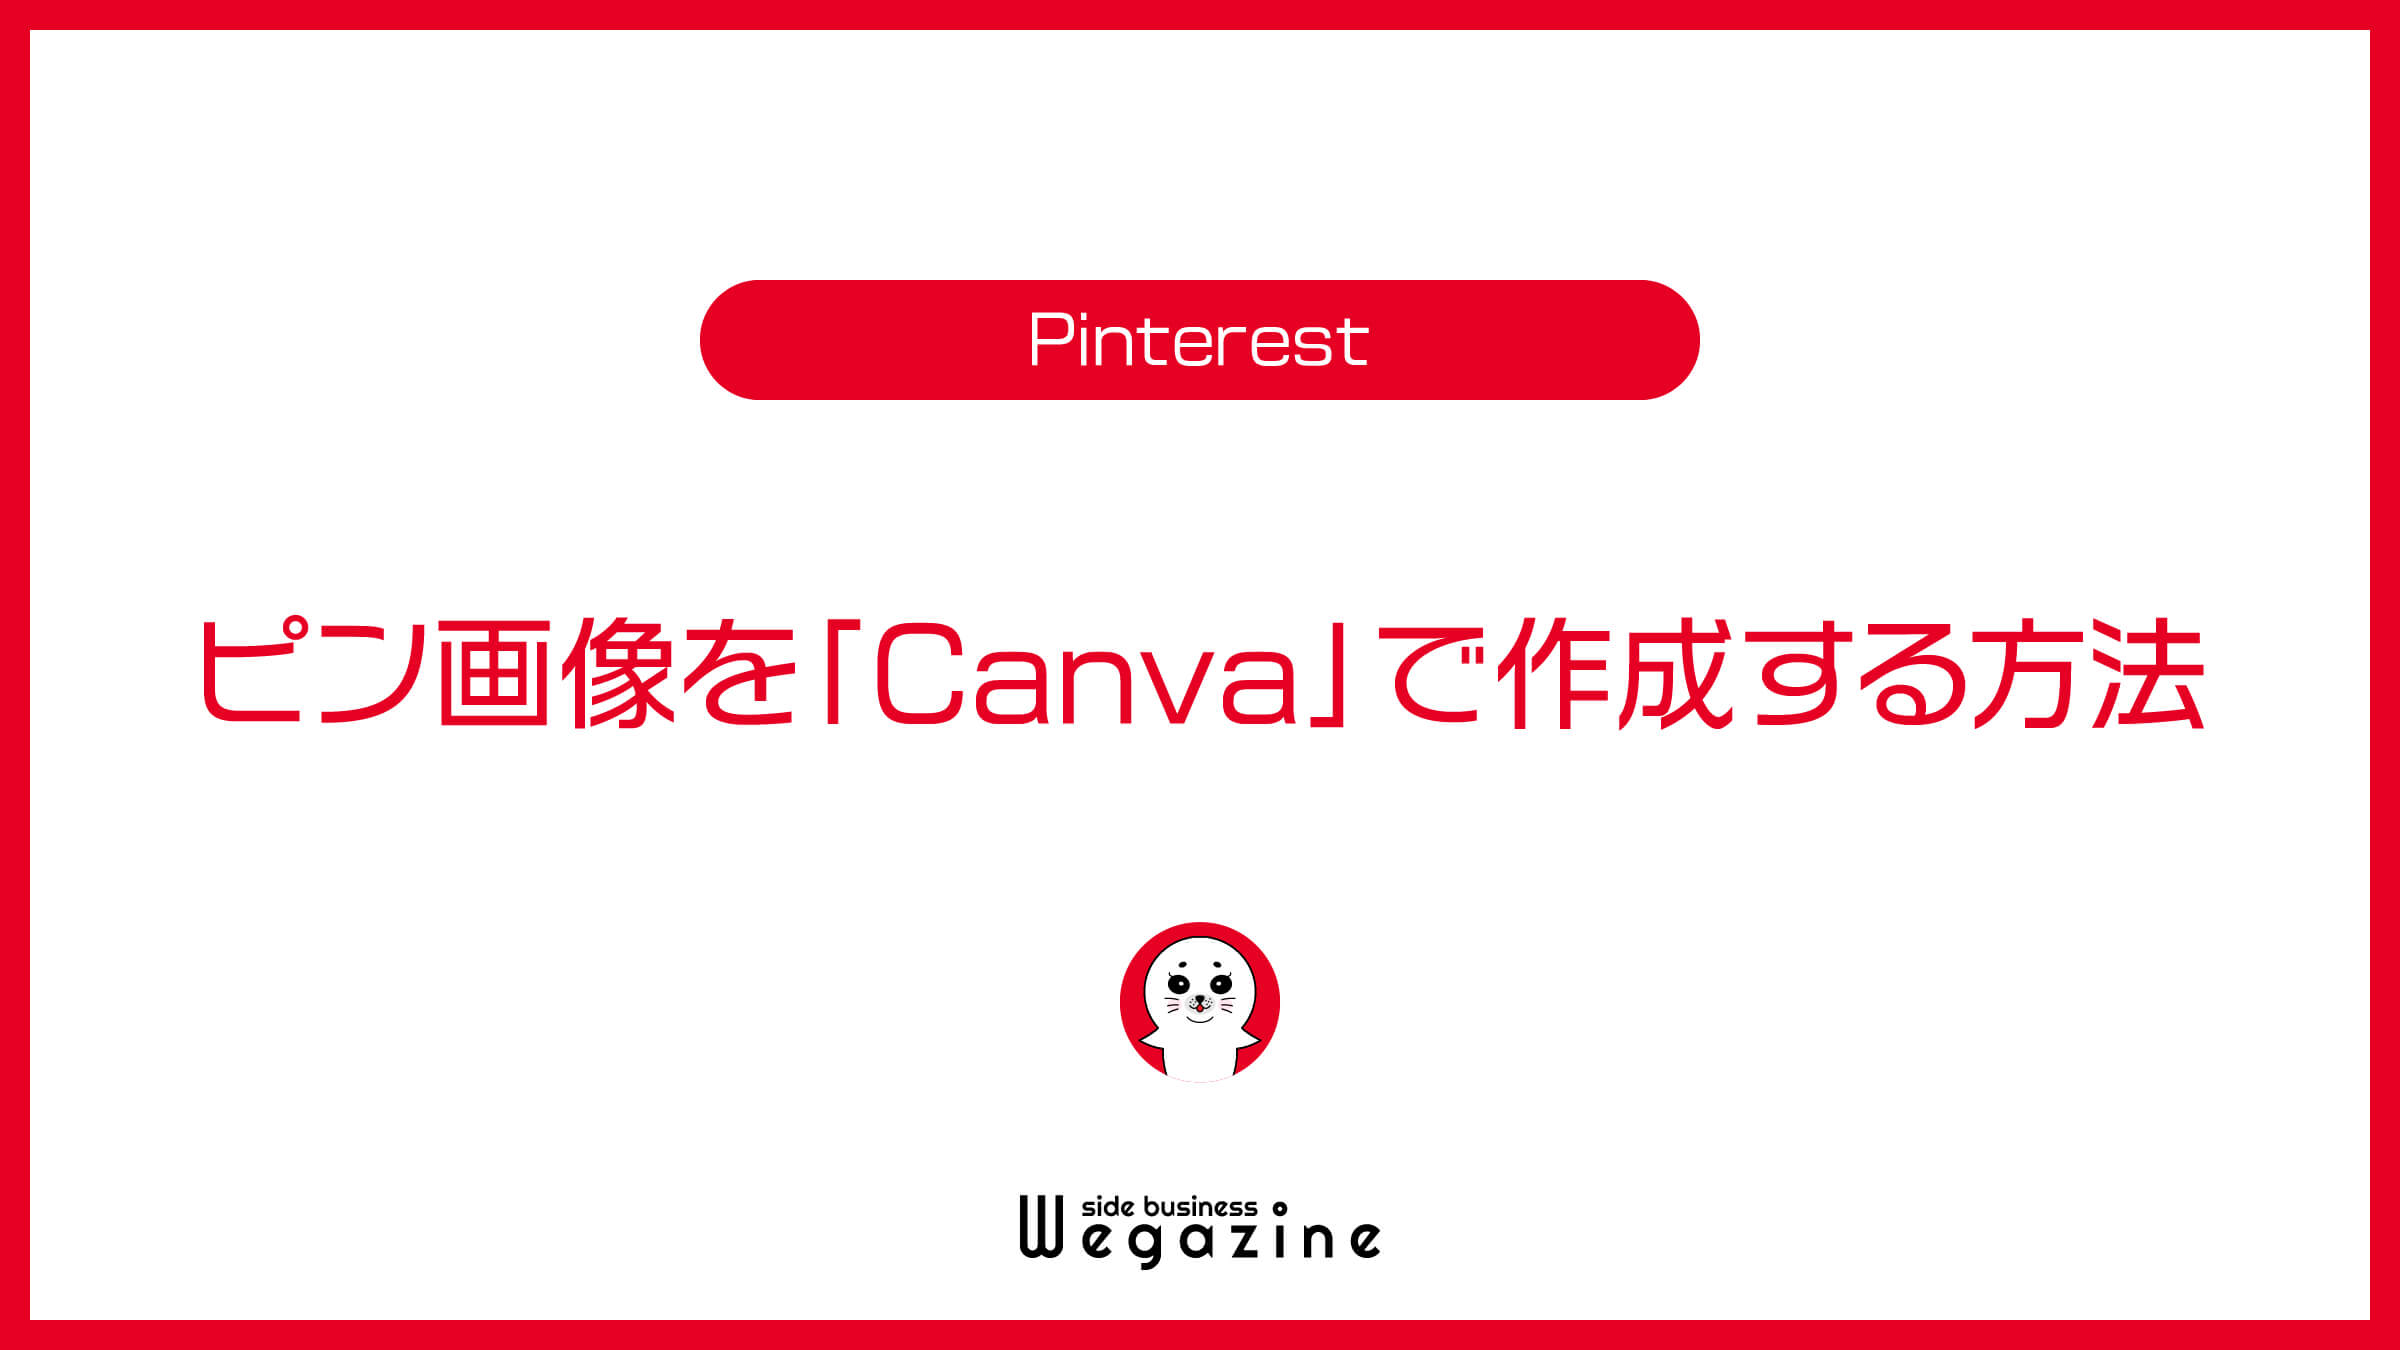 Pinterestのピン画像を「Canva」で作成する方法